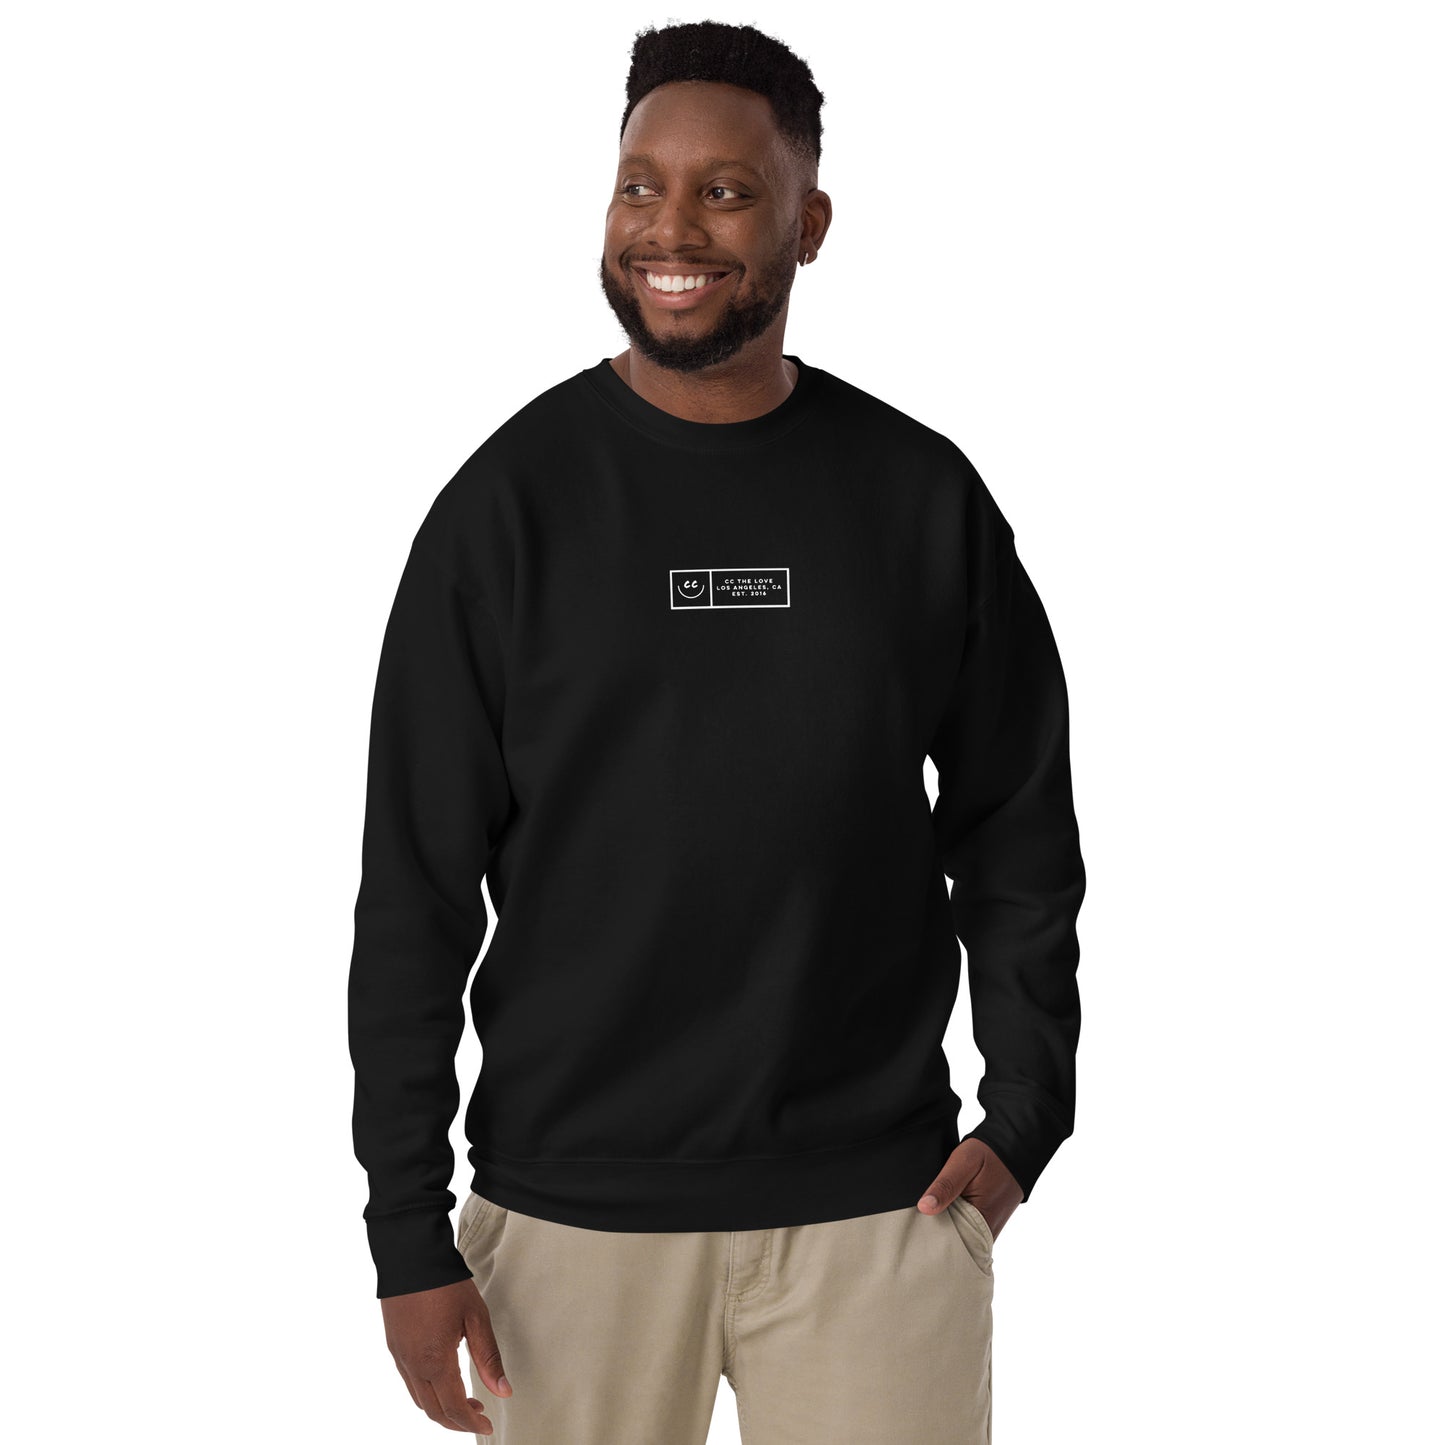 Boxed Smile Fleece in Black - Sweatshirt